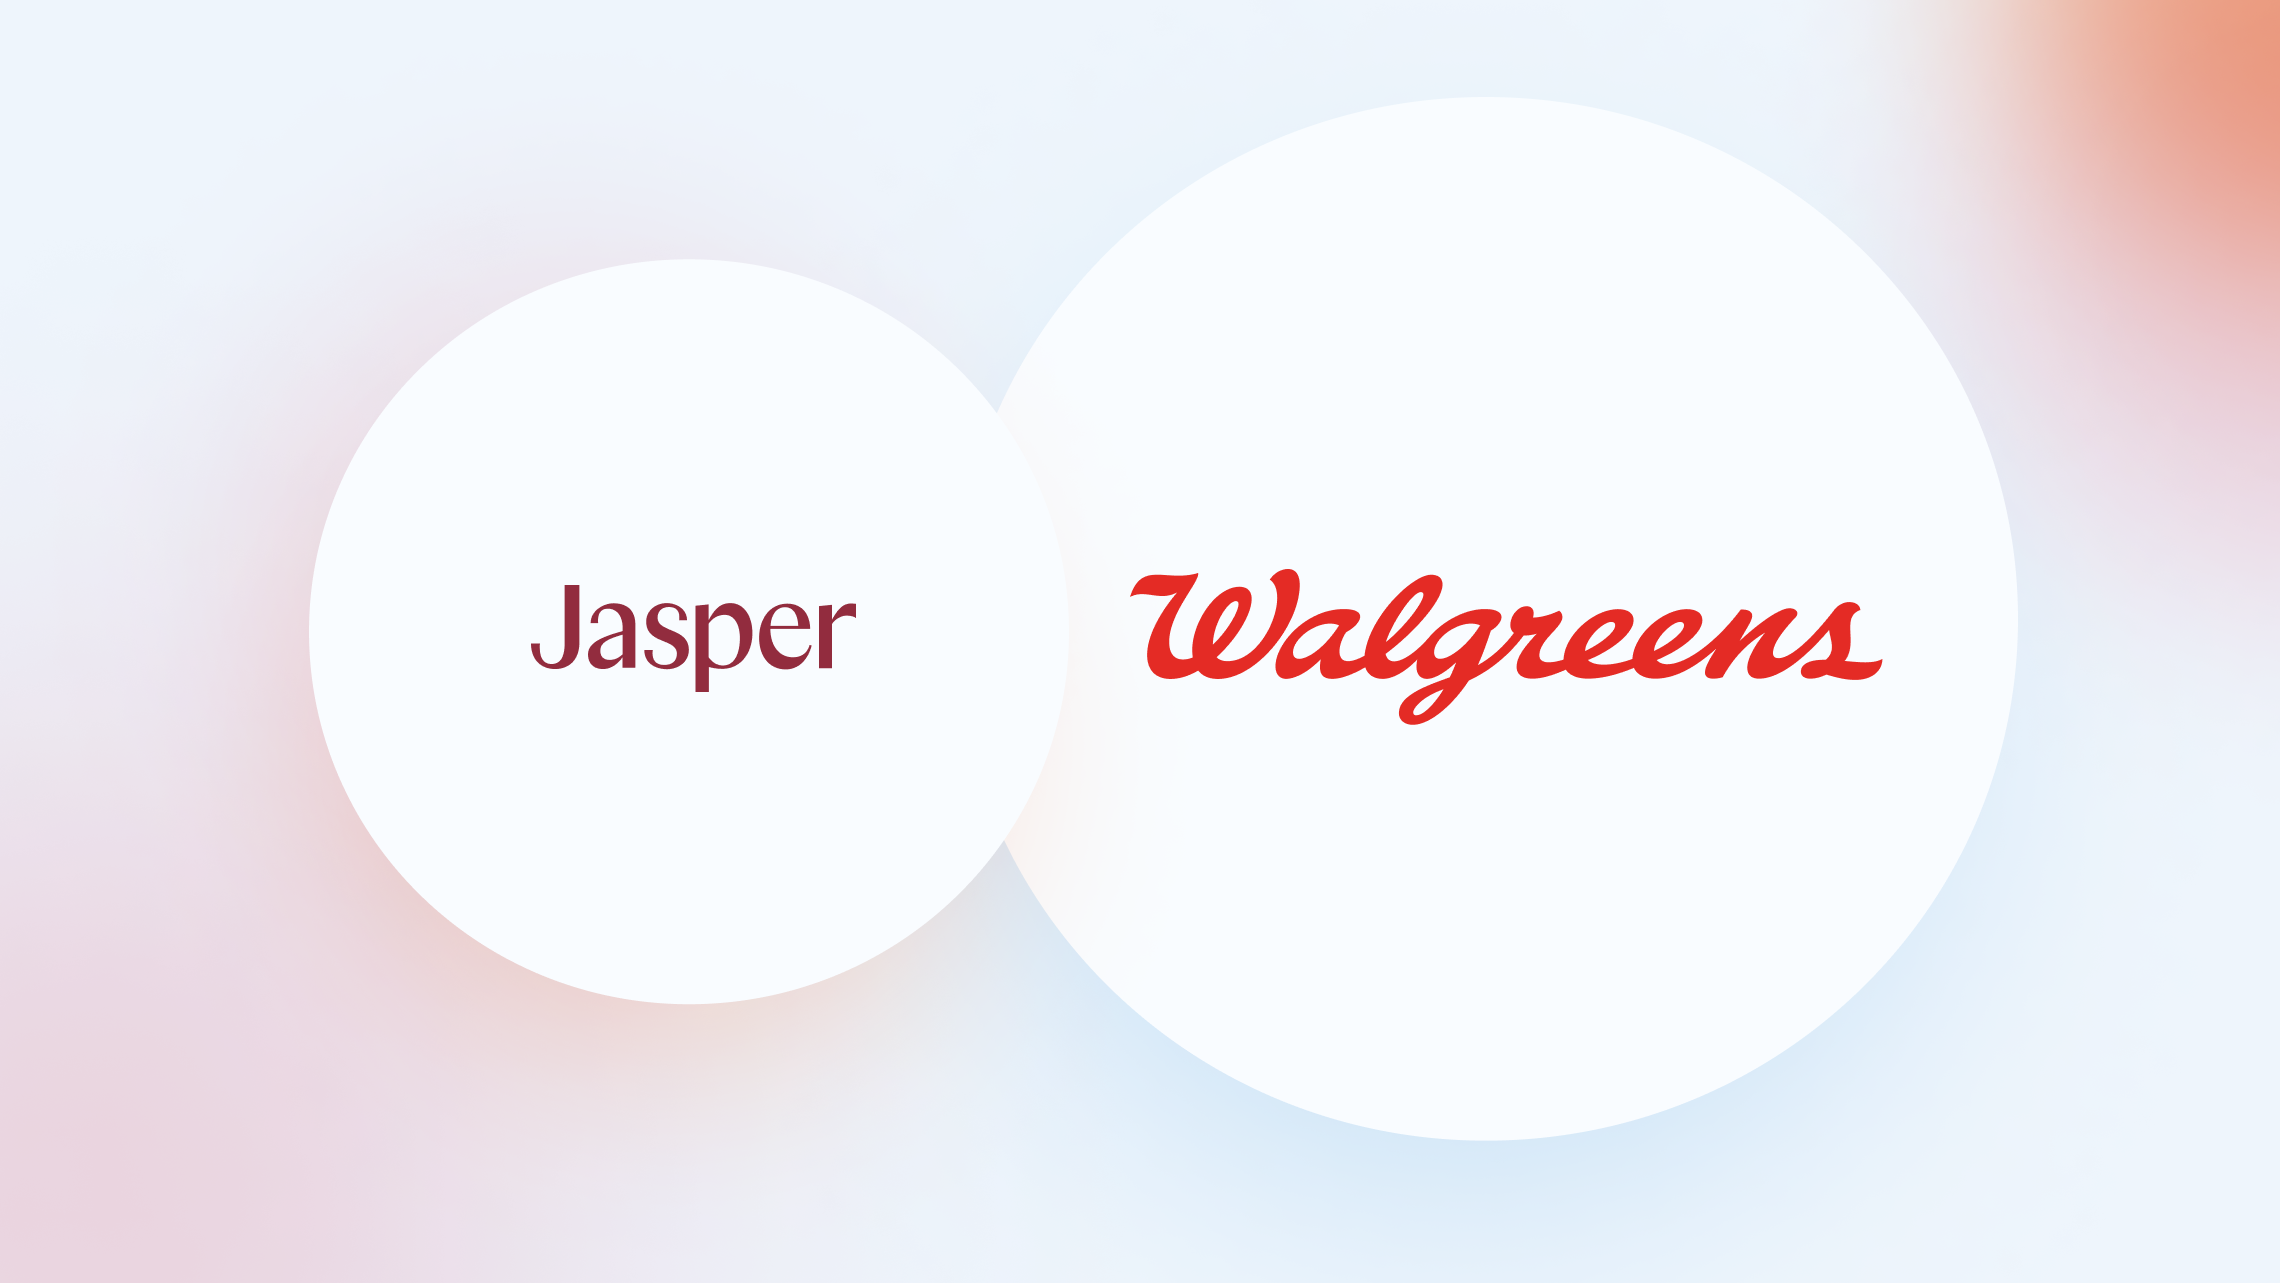 Jasper logo and Walgreens logo in two white circles